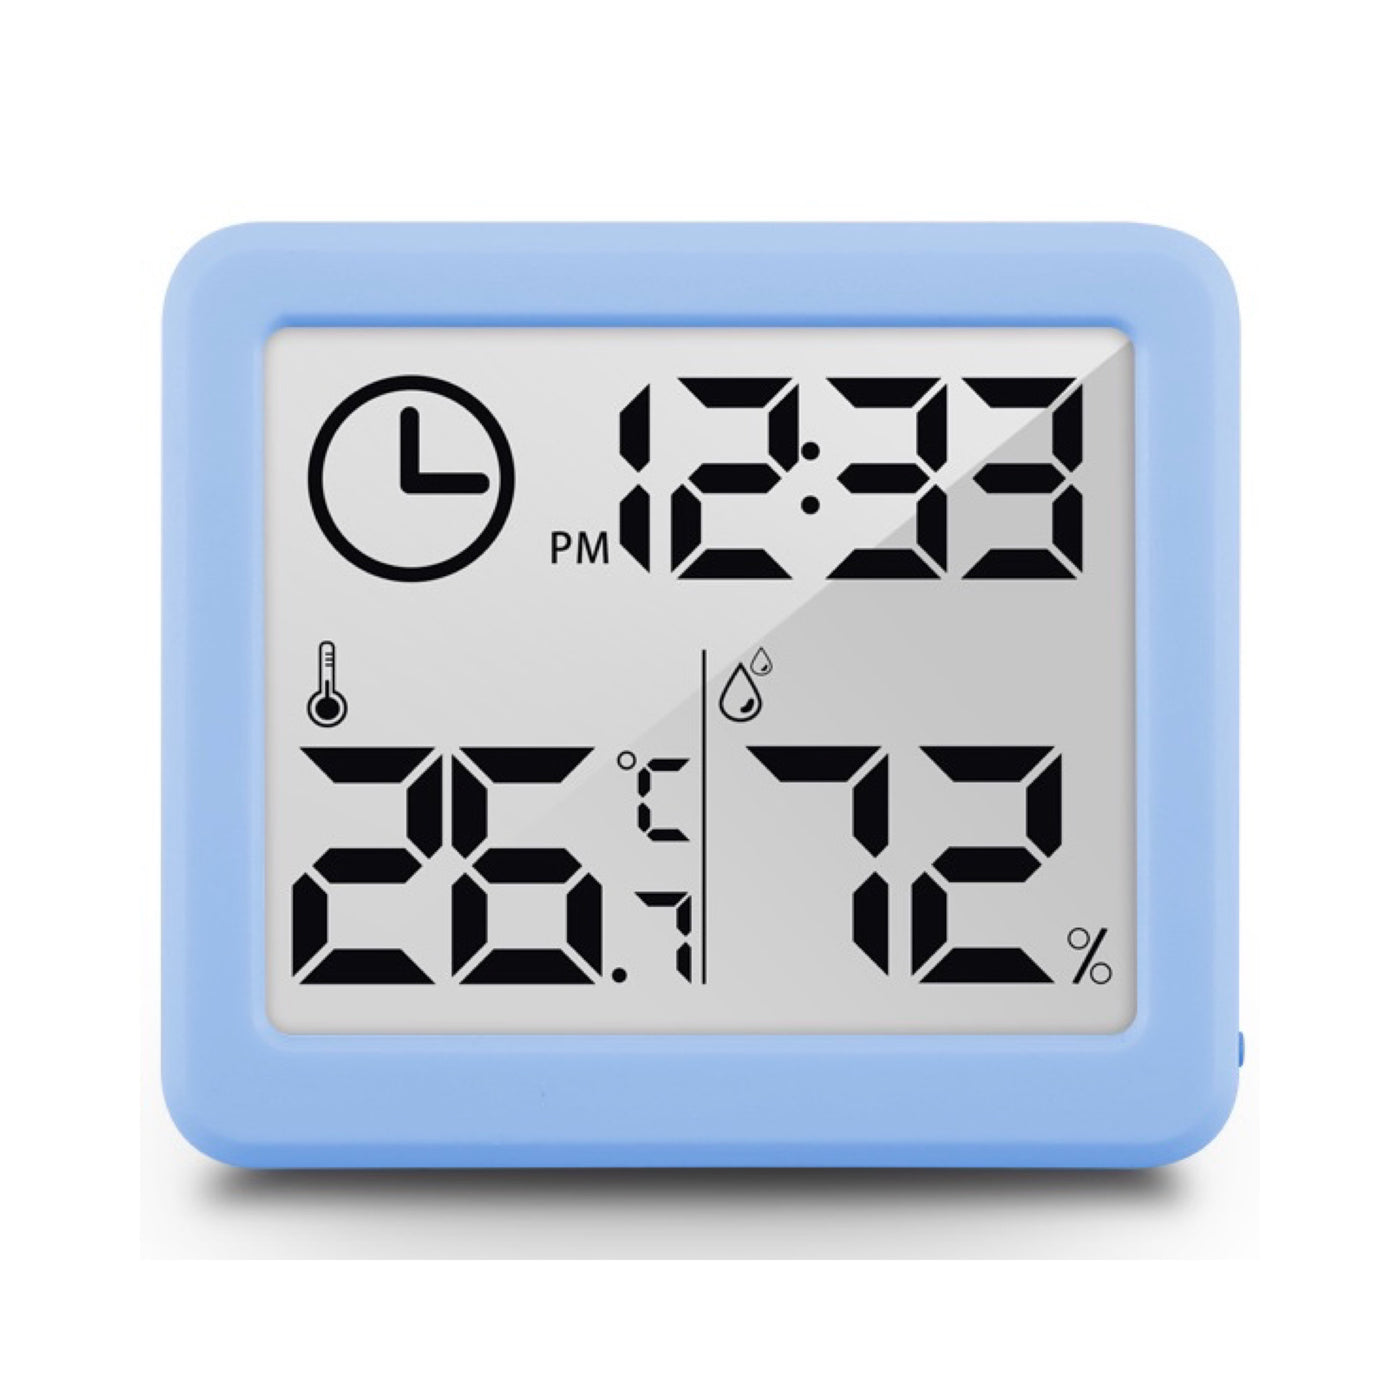 Intelligent temperature and humidity meter - SENSELASHES